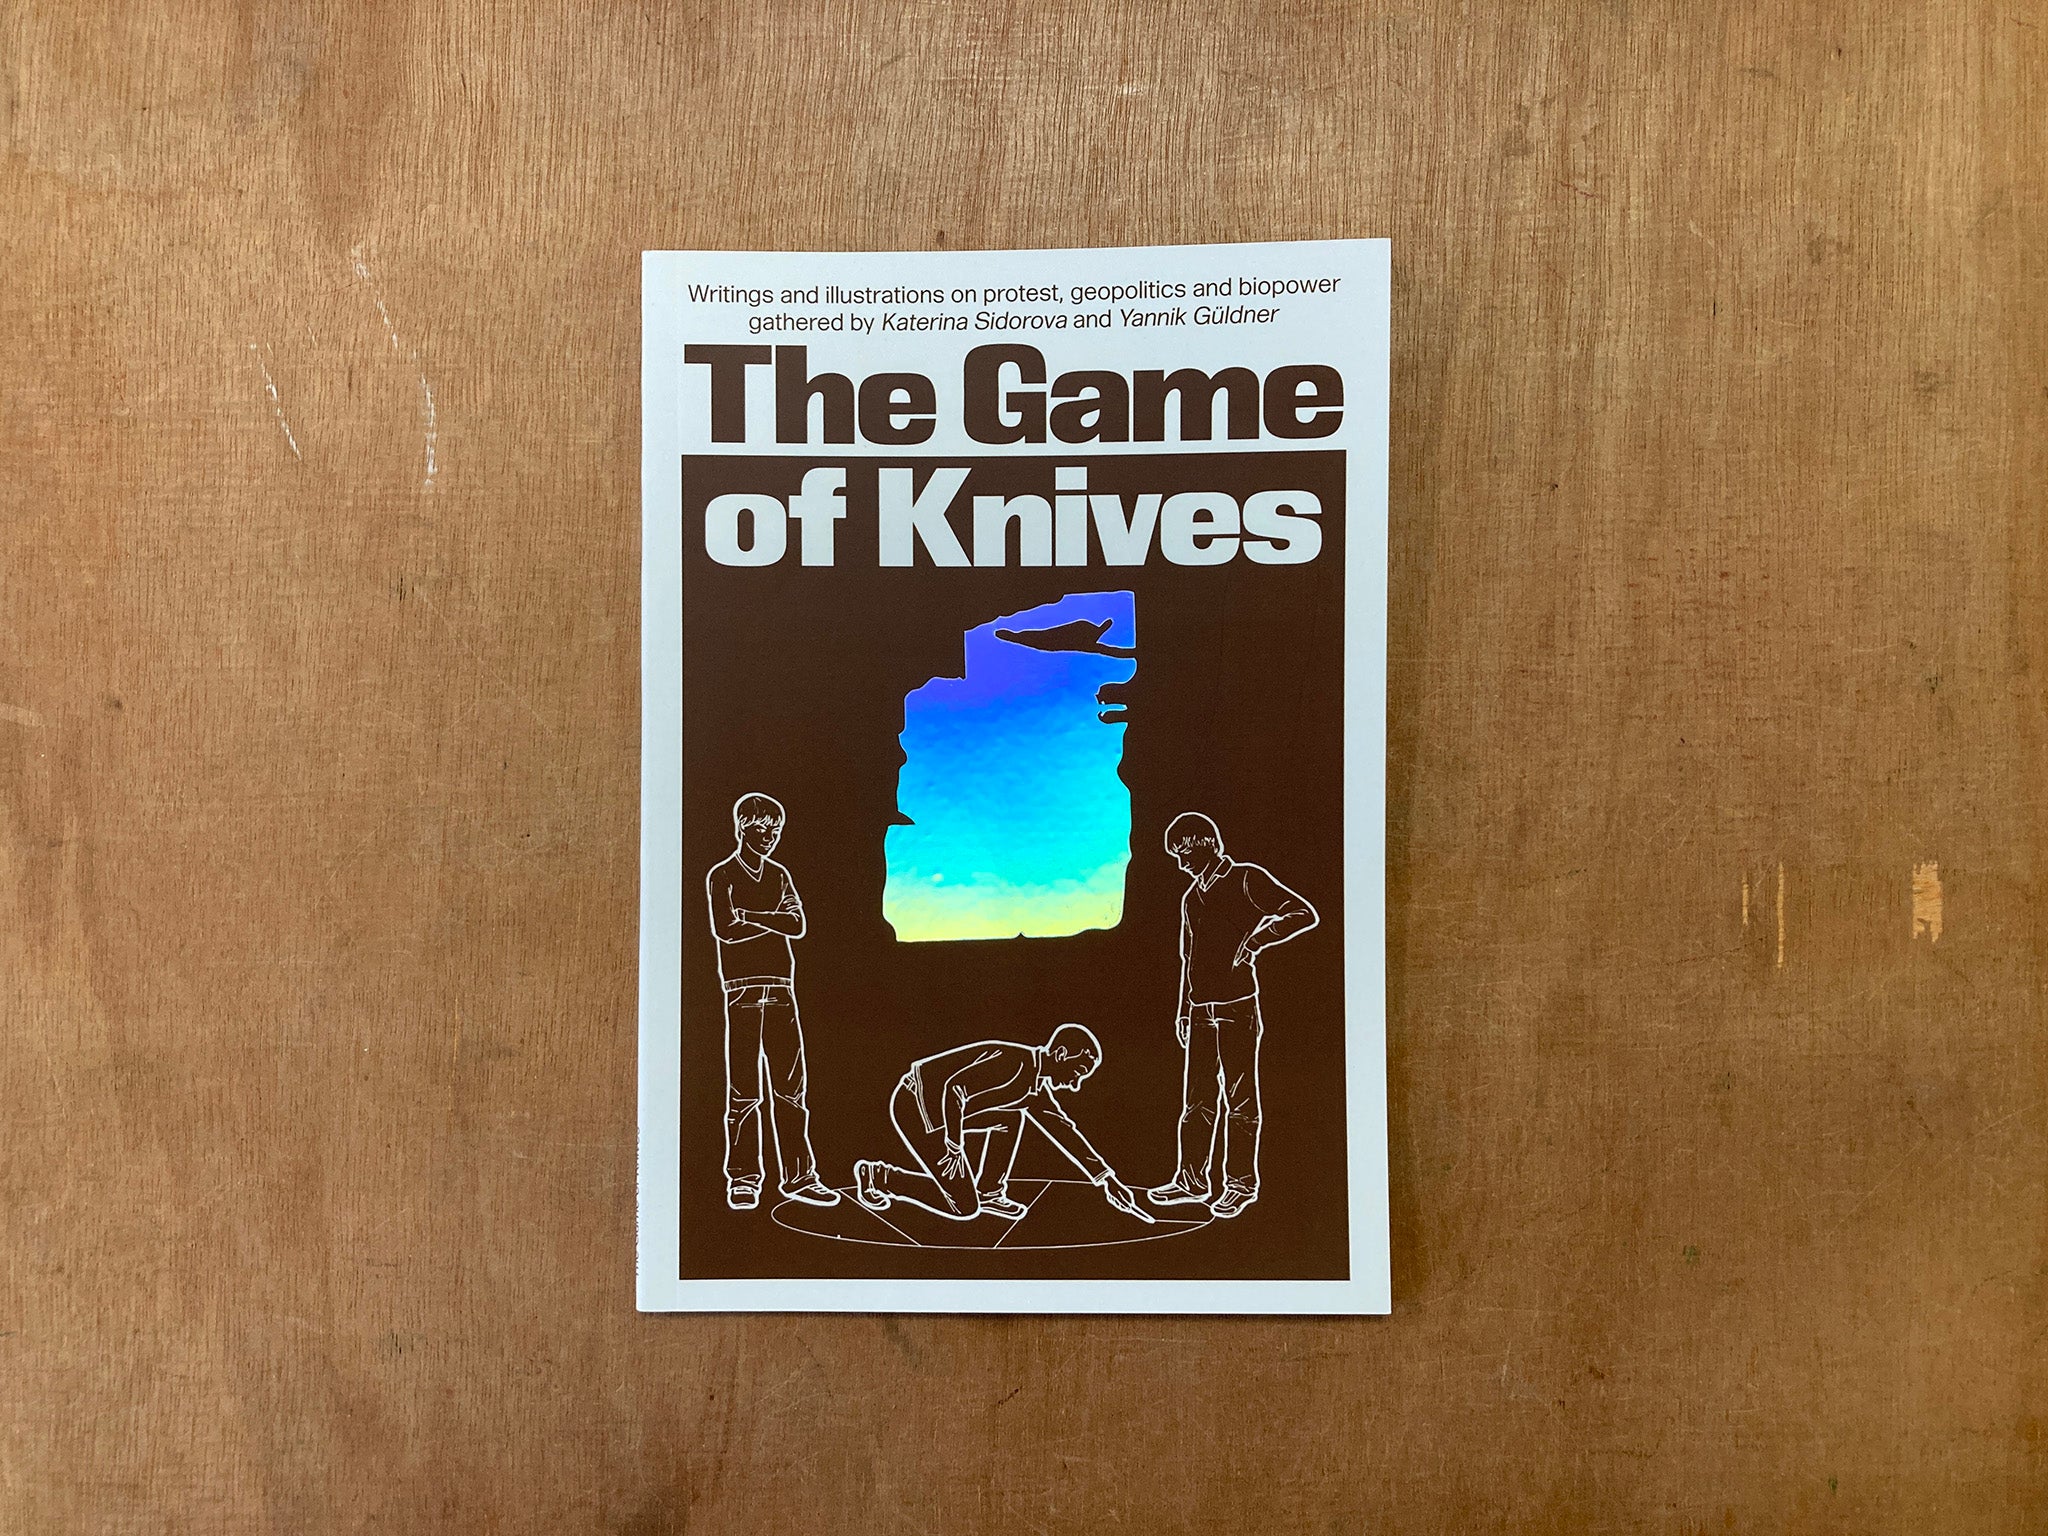 THE GAME OF KNIVES by Katerina Sidorova and Yannik Güldner